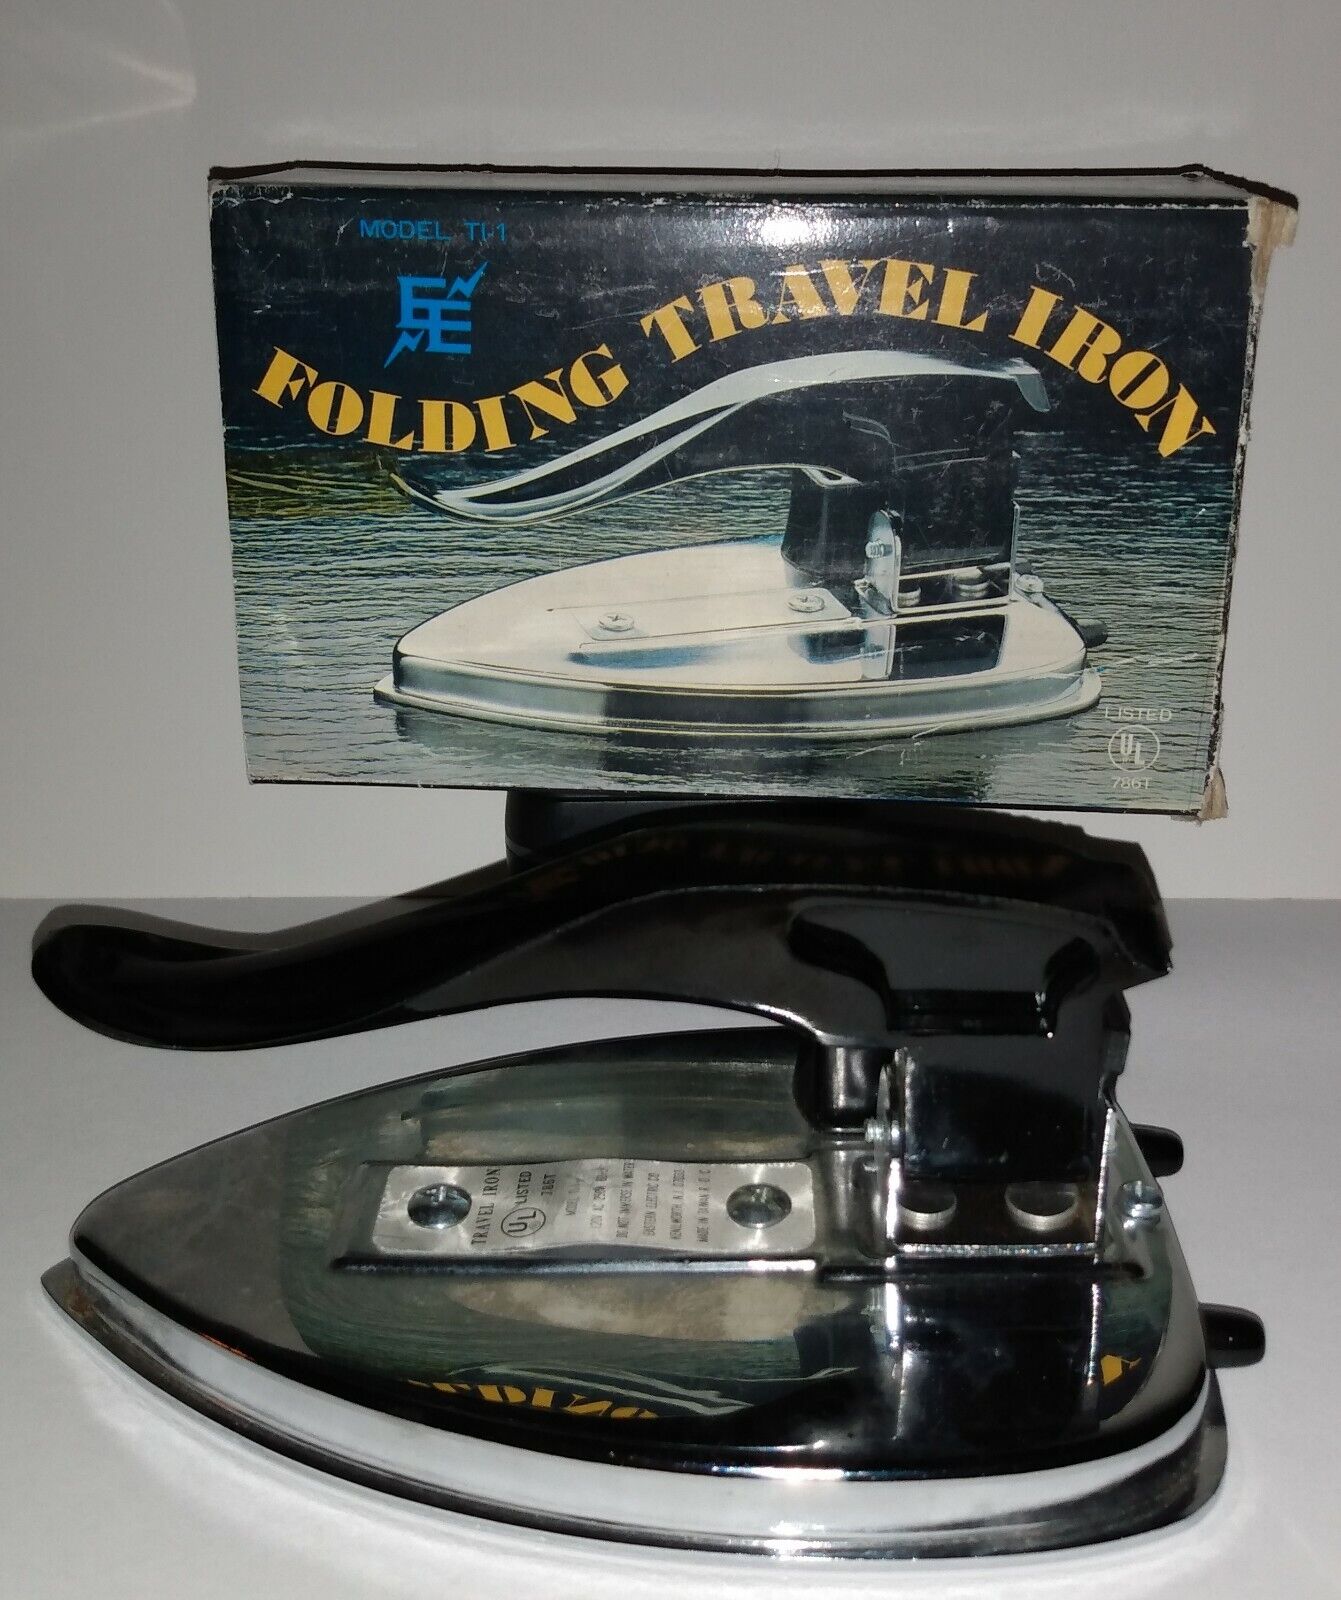 Vintage Eastern Electric Folding Travel Iron With Original Box